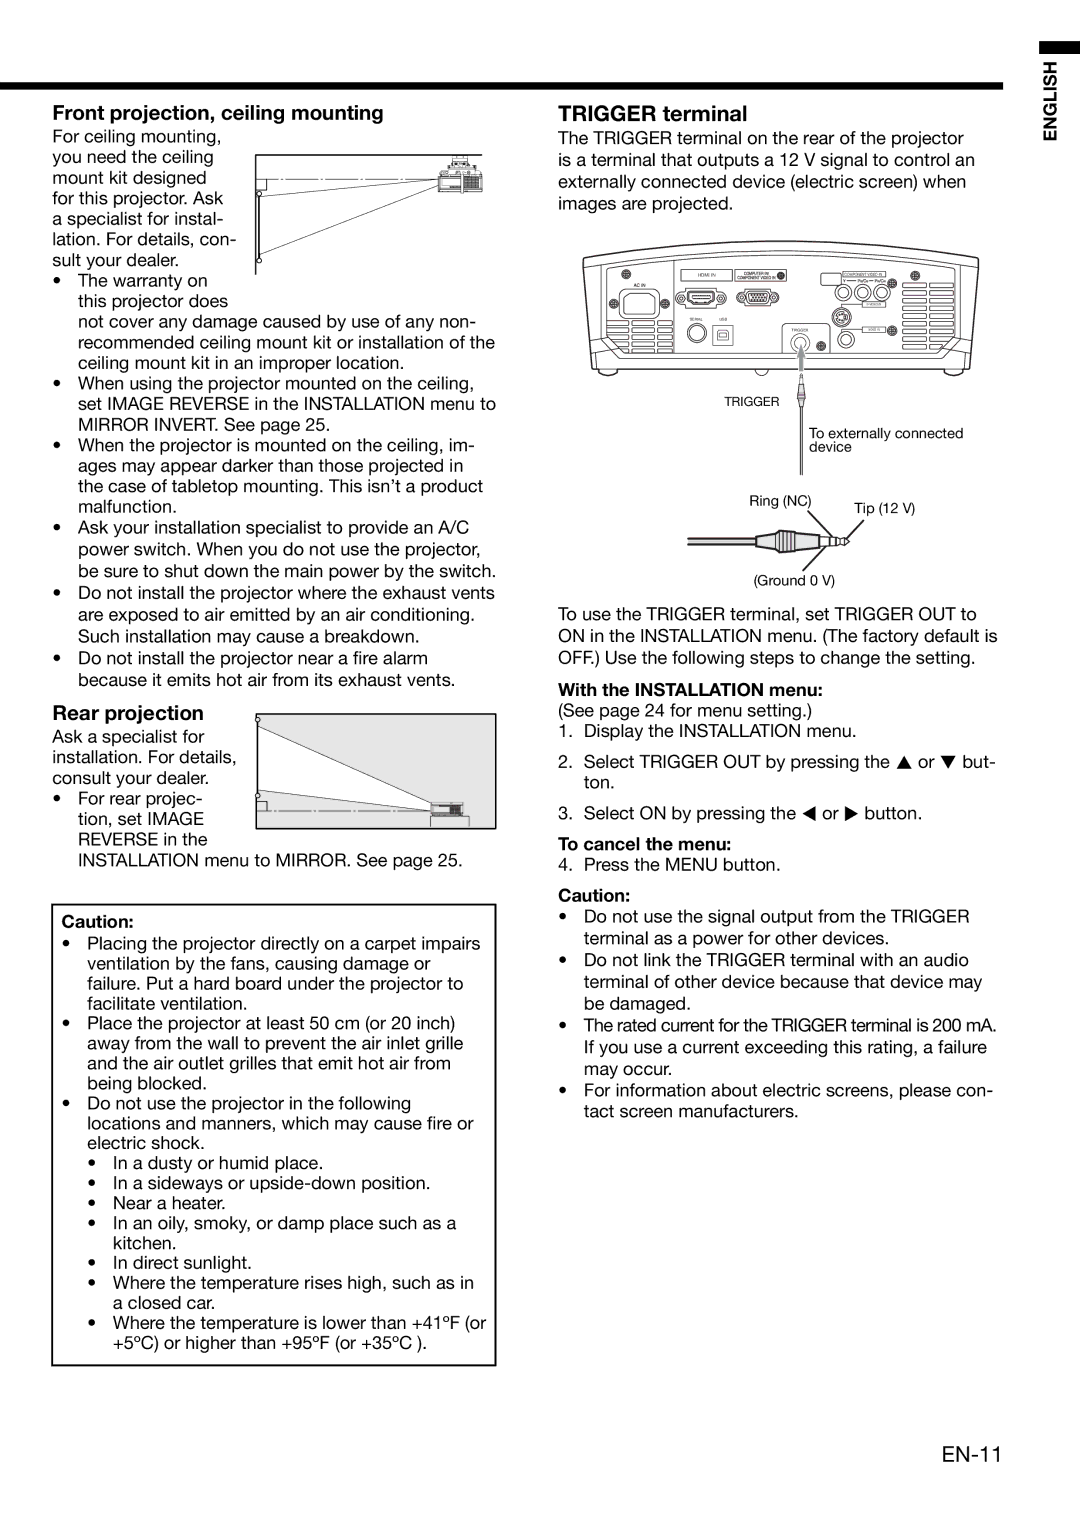 Mitsubishi Electronics HD1000 user manual Trigger terminal, With the Installation menu See page 24 for menu setting 